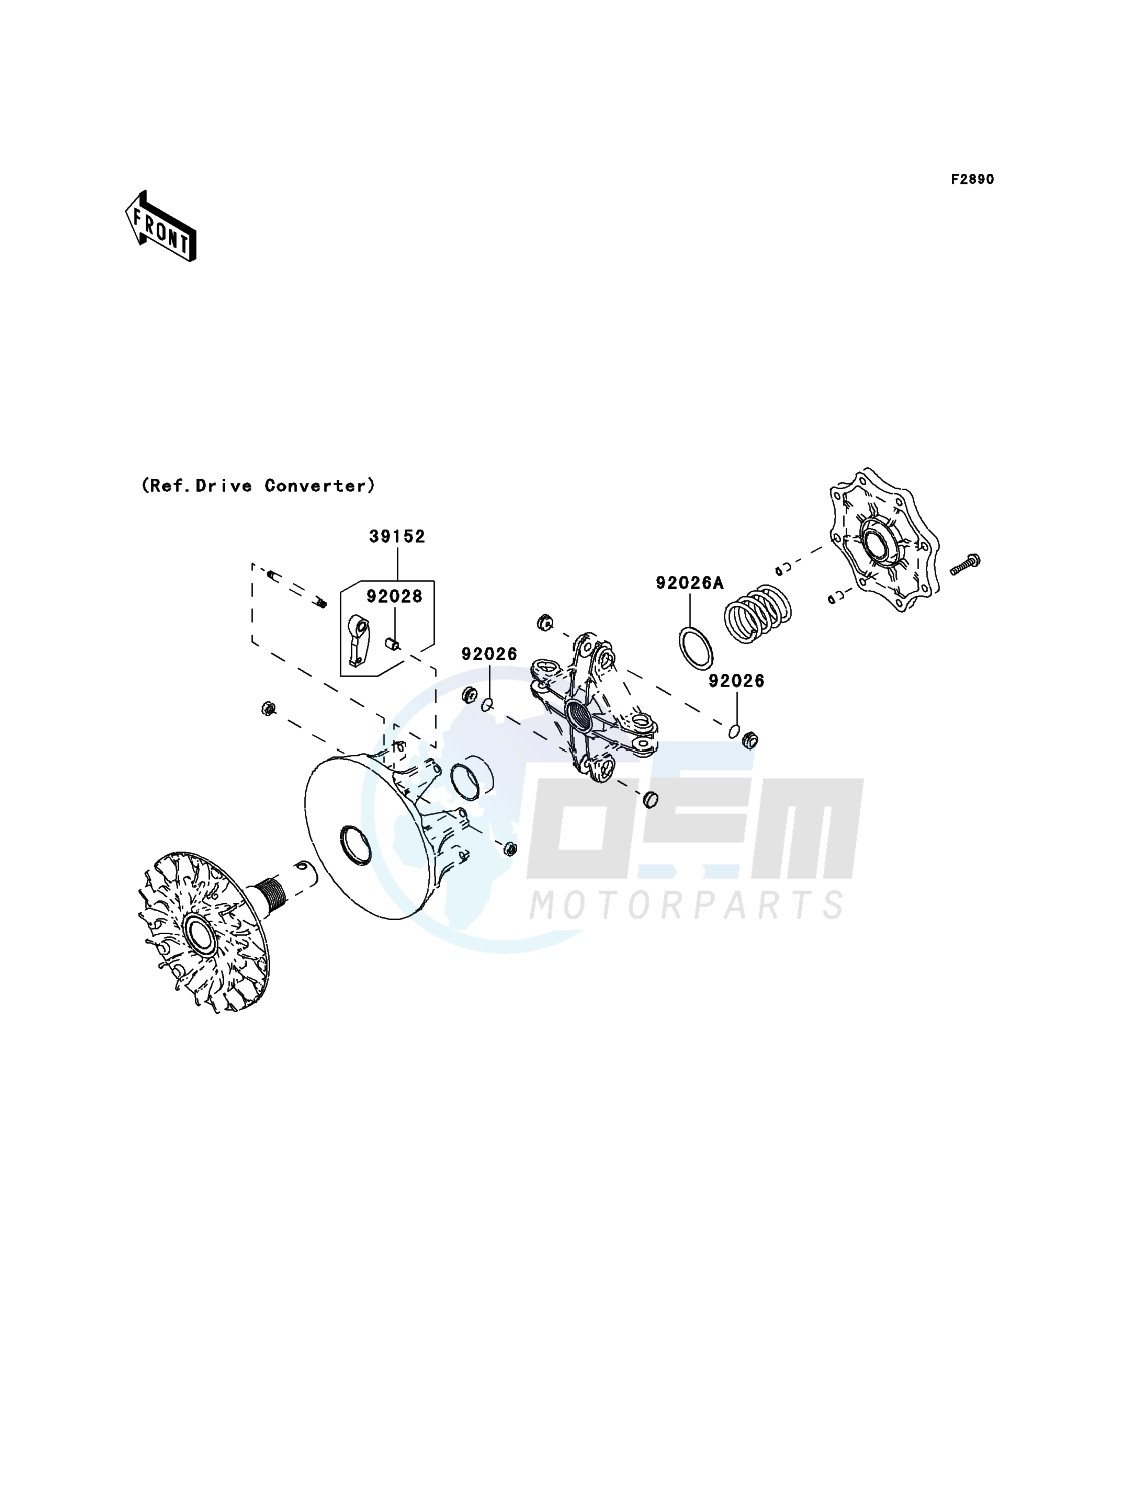 Optional Parts(Drive Converter) blueprint